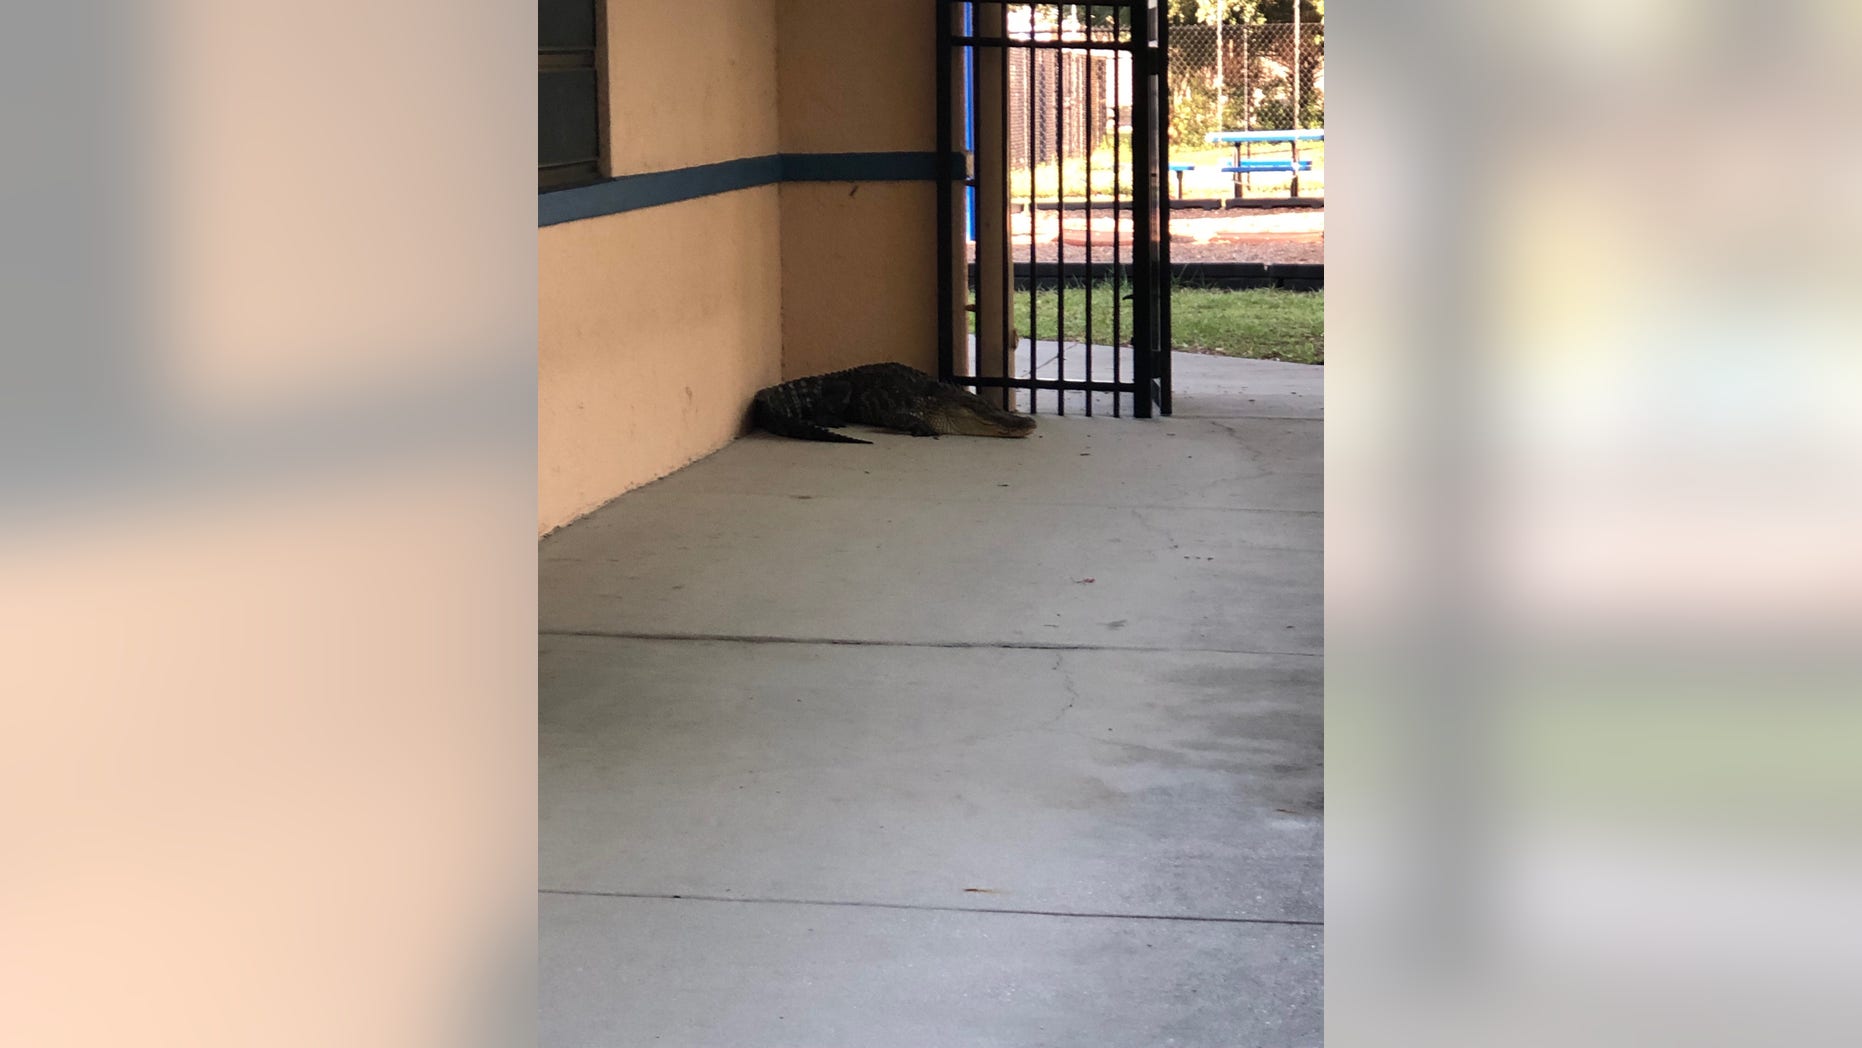 8-foot alligator visits Florida elementary school just before summer break